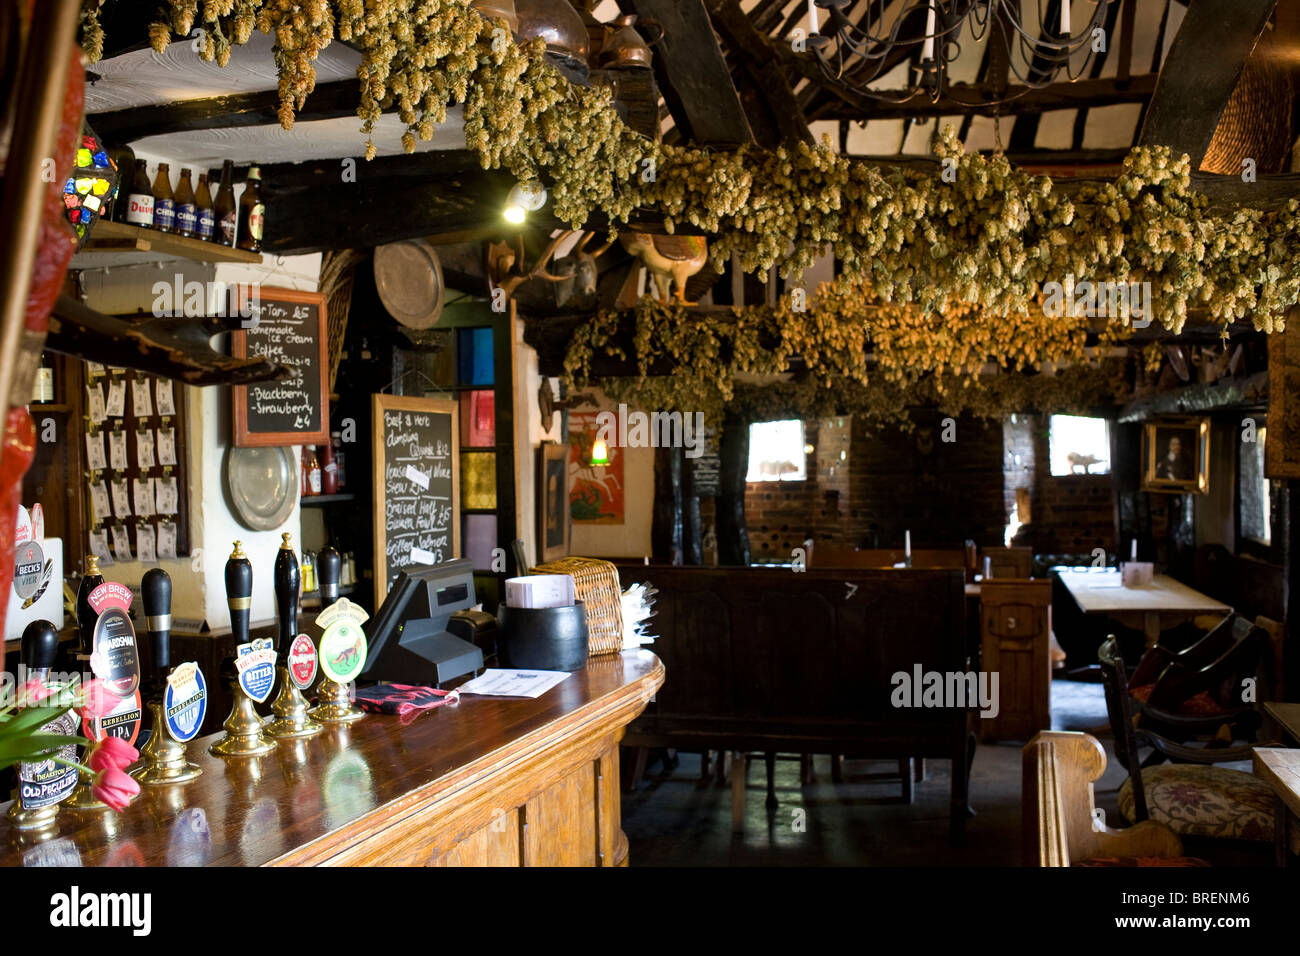 The Royal Standard Pub near London. The pub has a traditional seventeenth century theme. Stock Photo